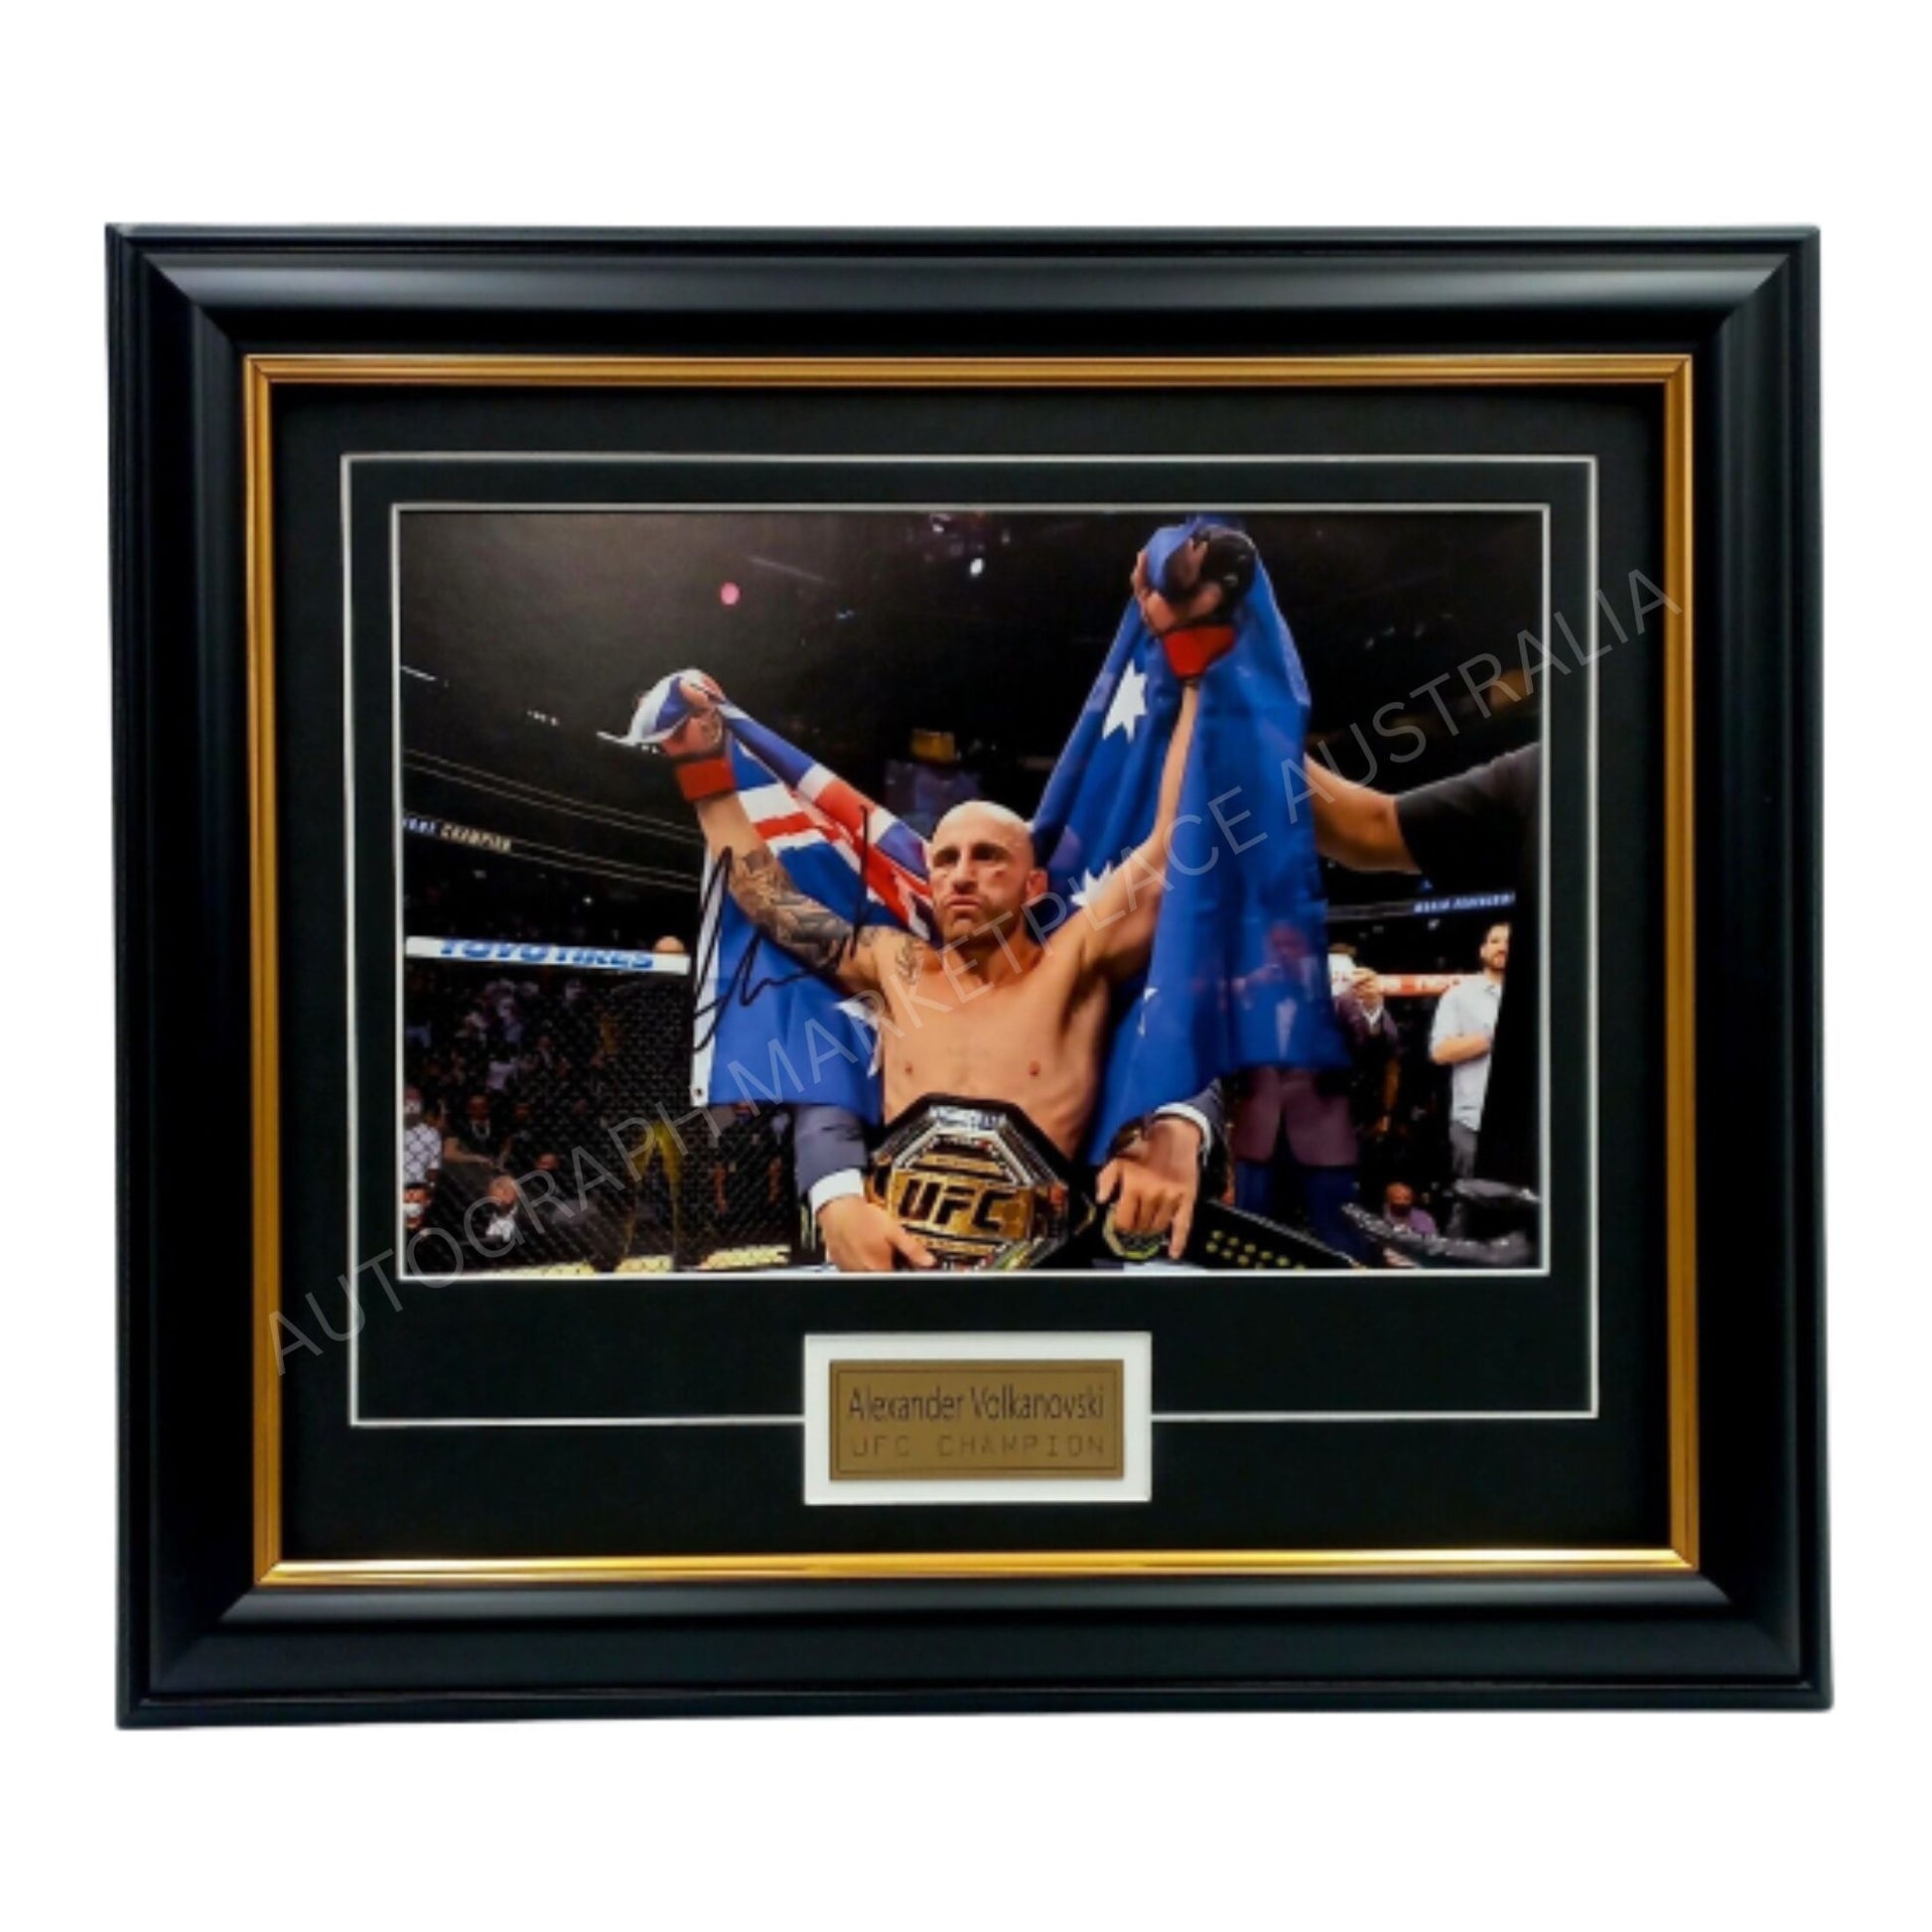  Framed Photo Memorabilia - UFC Featherweight Champion Alexander Volkanovski